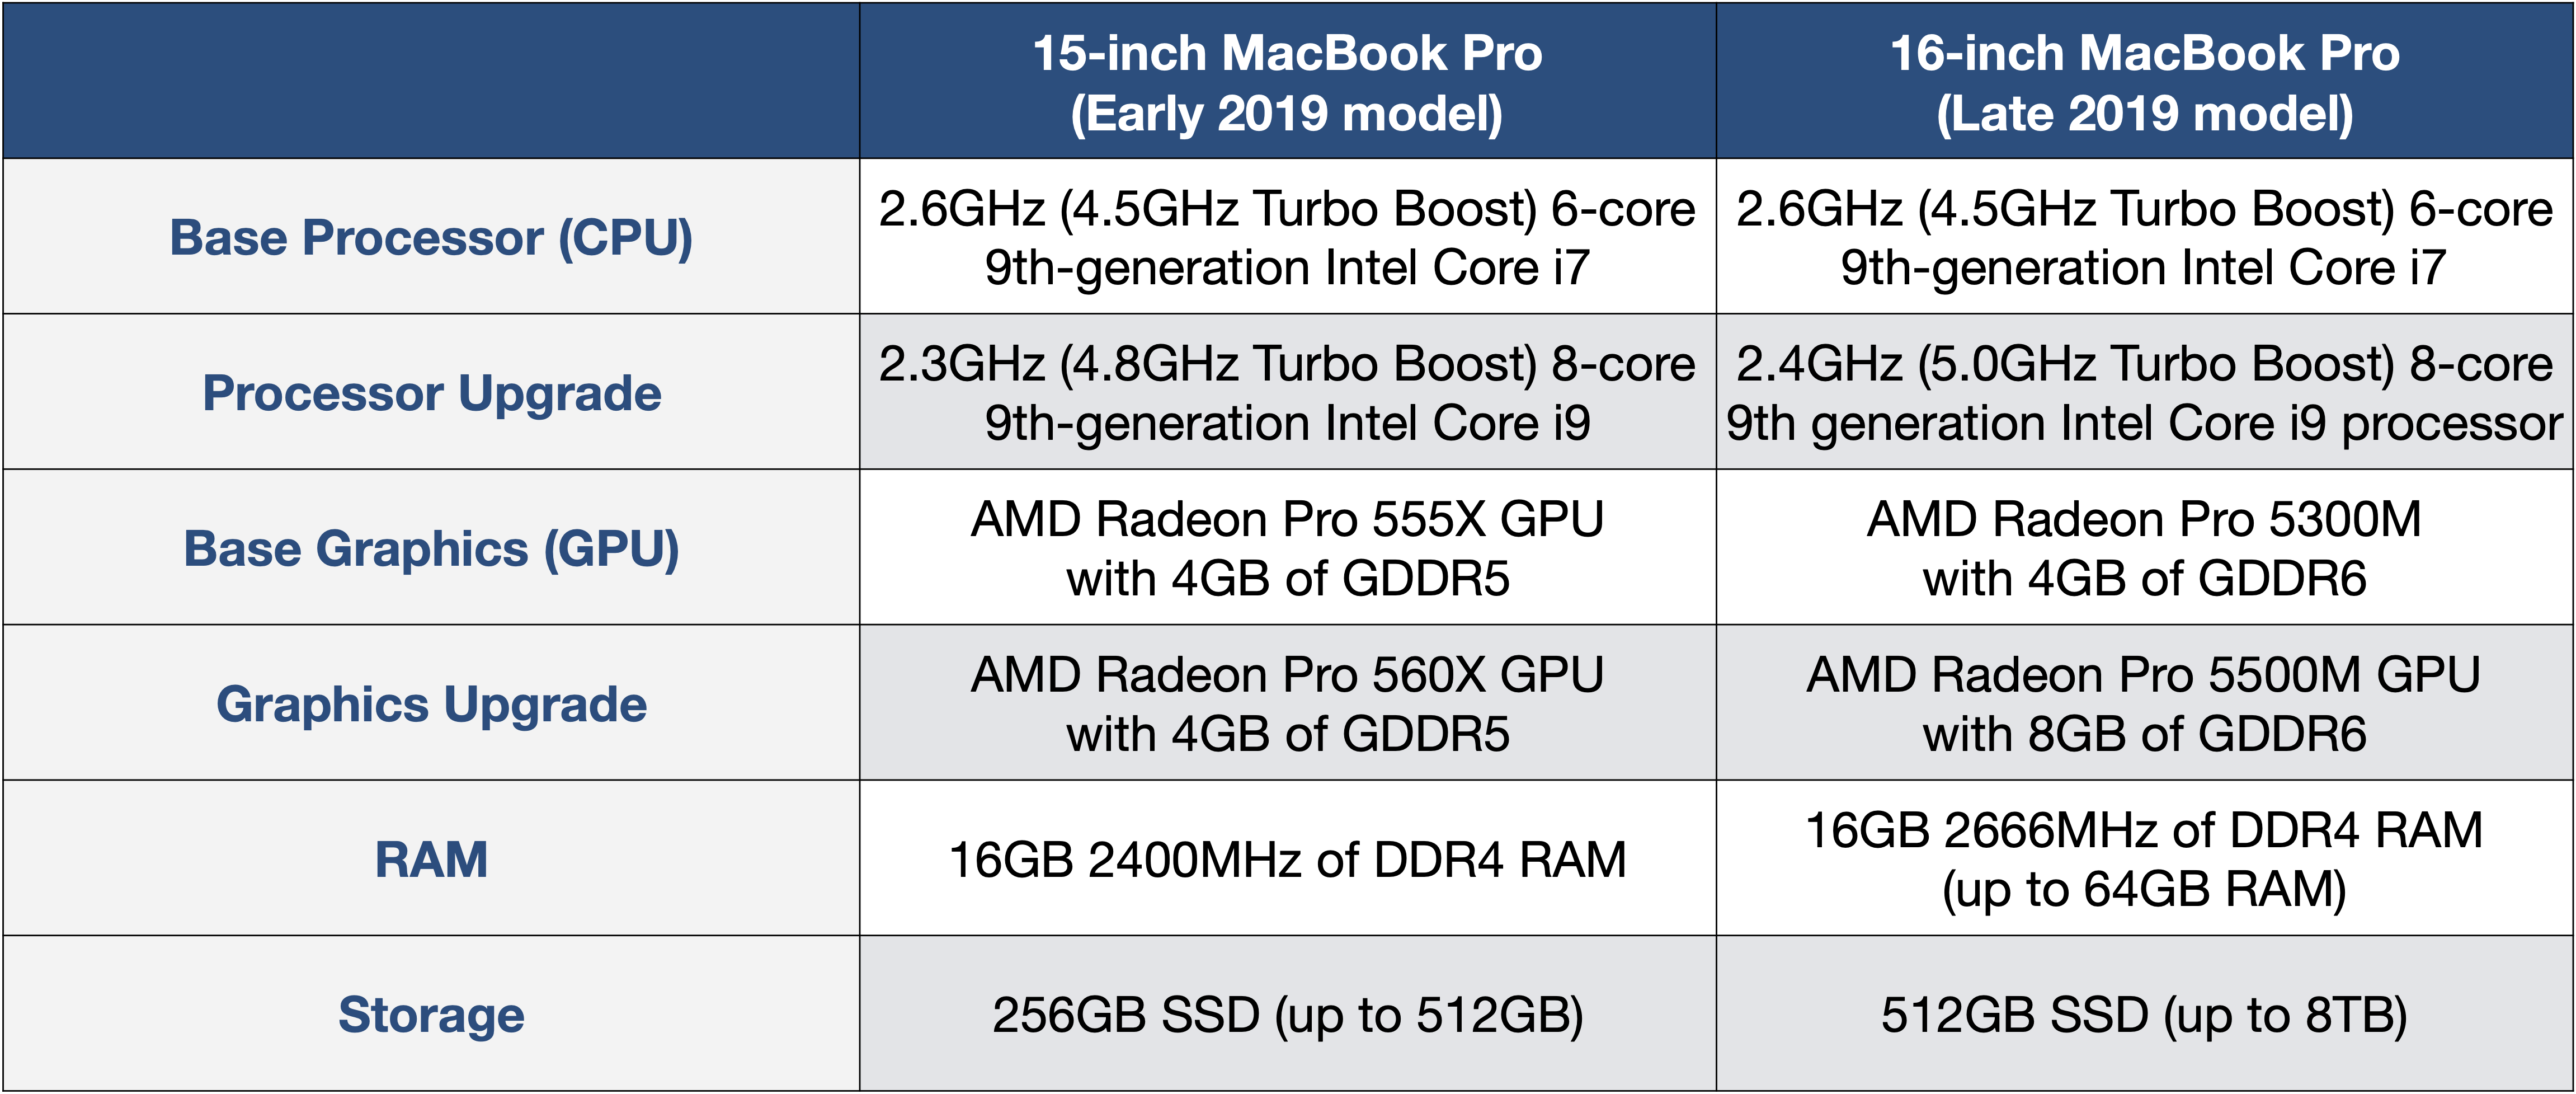 klippe Gamle tider Do 15-inch vs 16-inch MacBook Pro comparison: Should you upgrade? - 9to5Mac